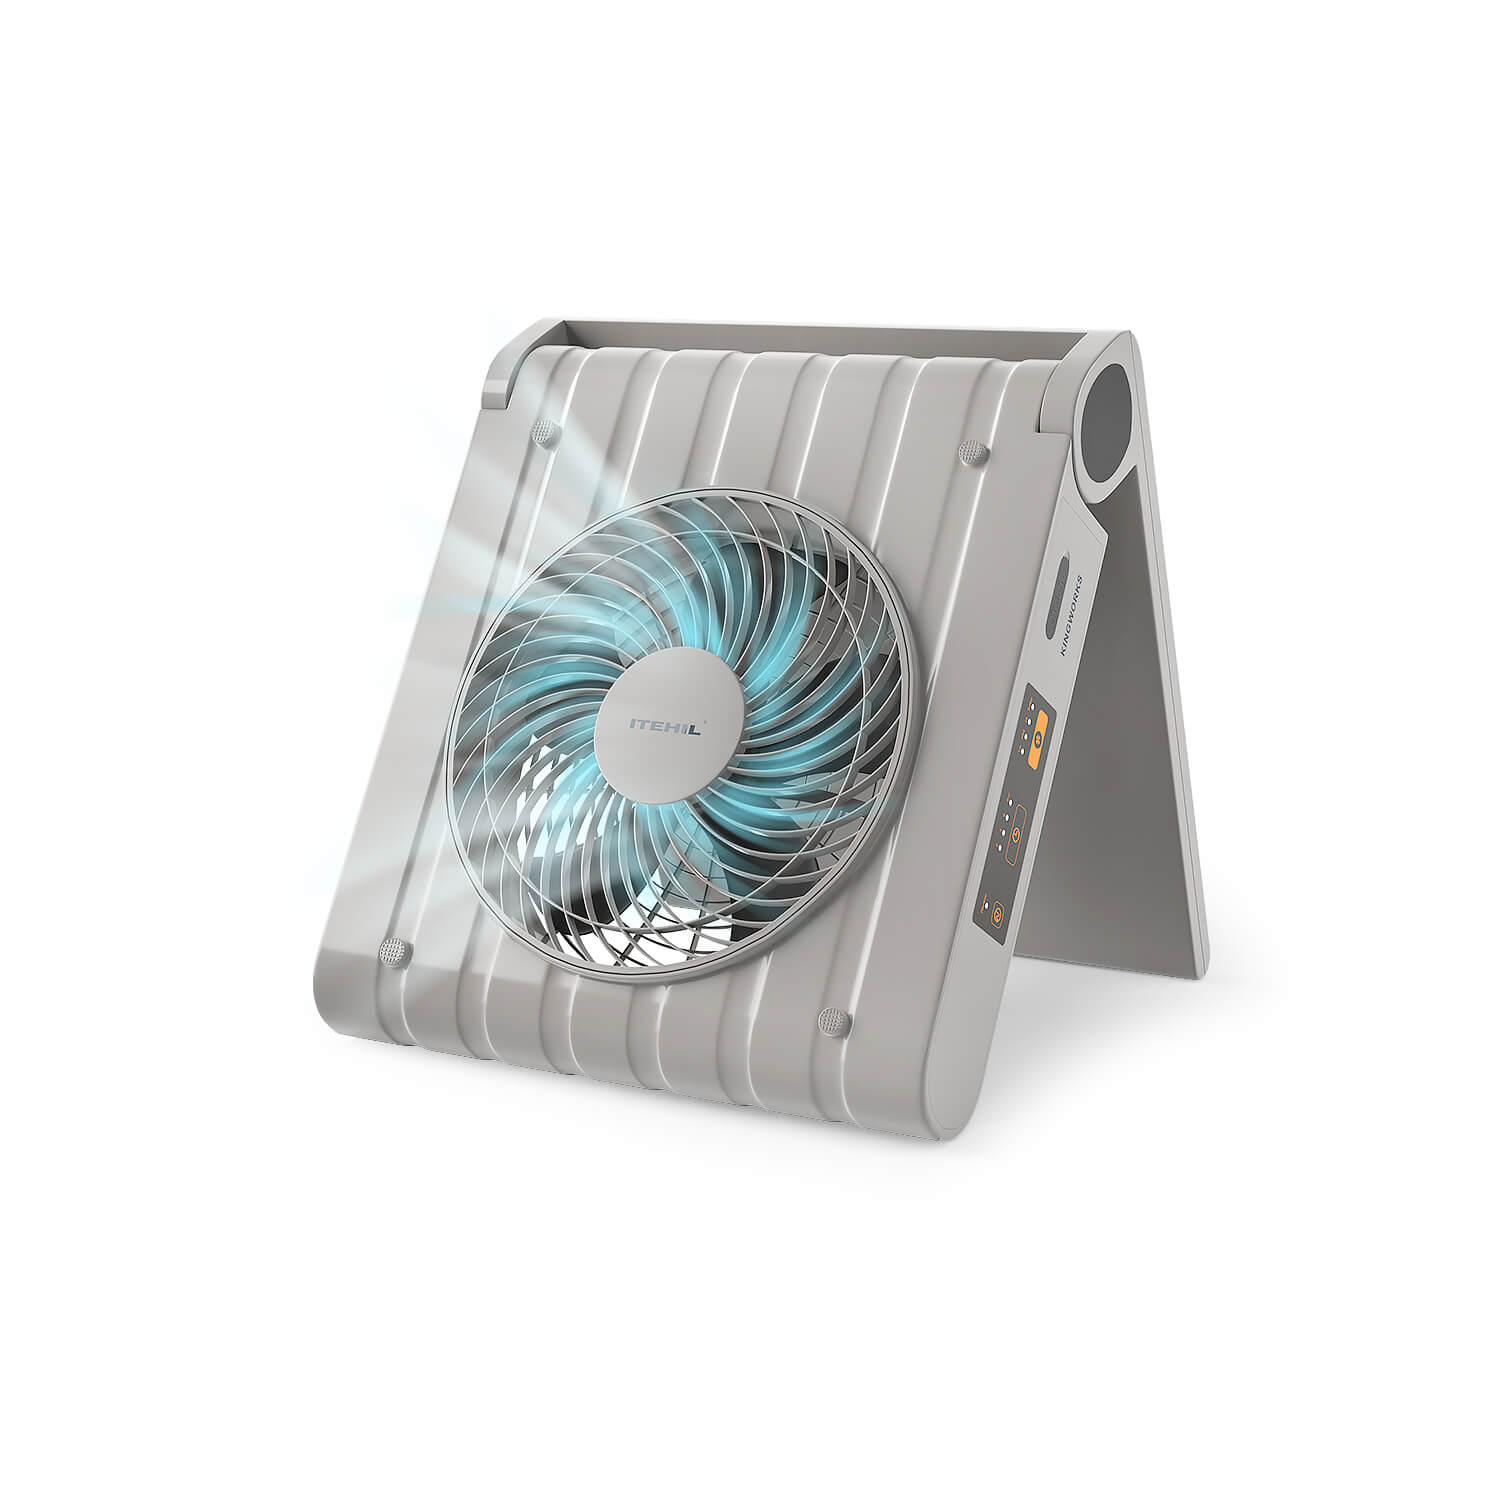 Portable Solar Ventilator with USB Solar Panel - Italy